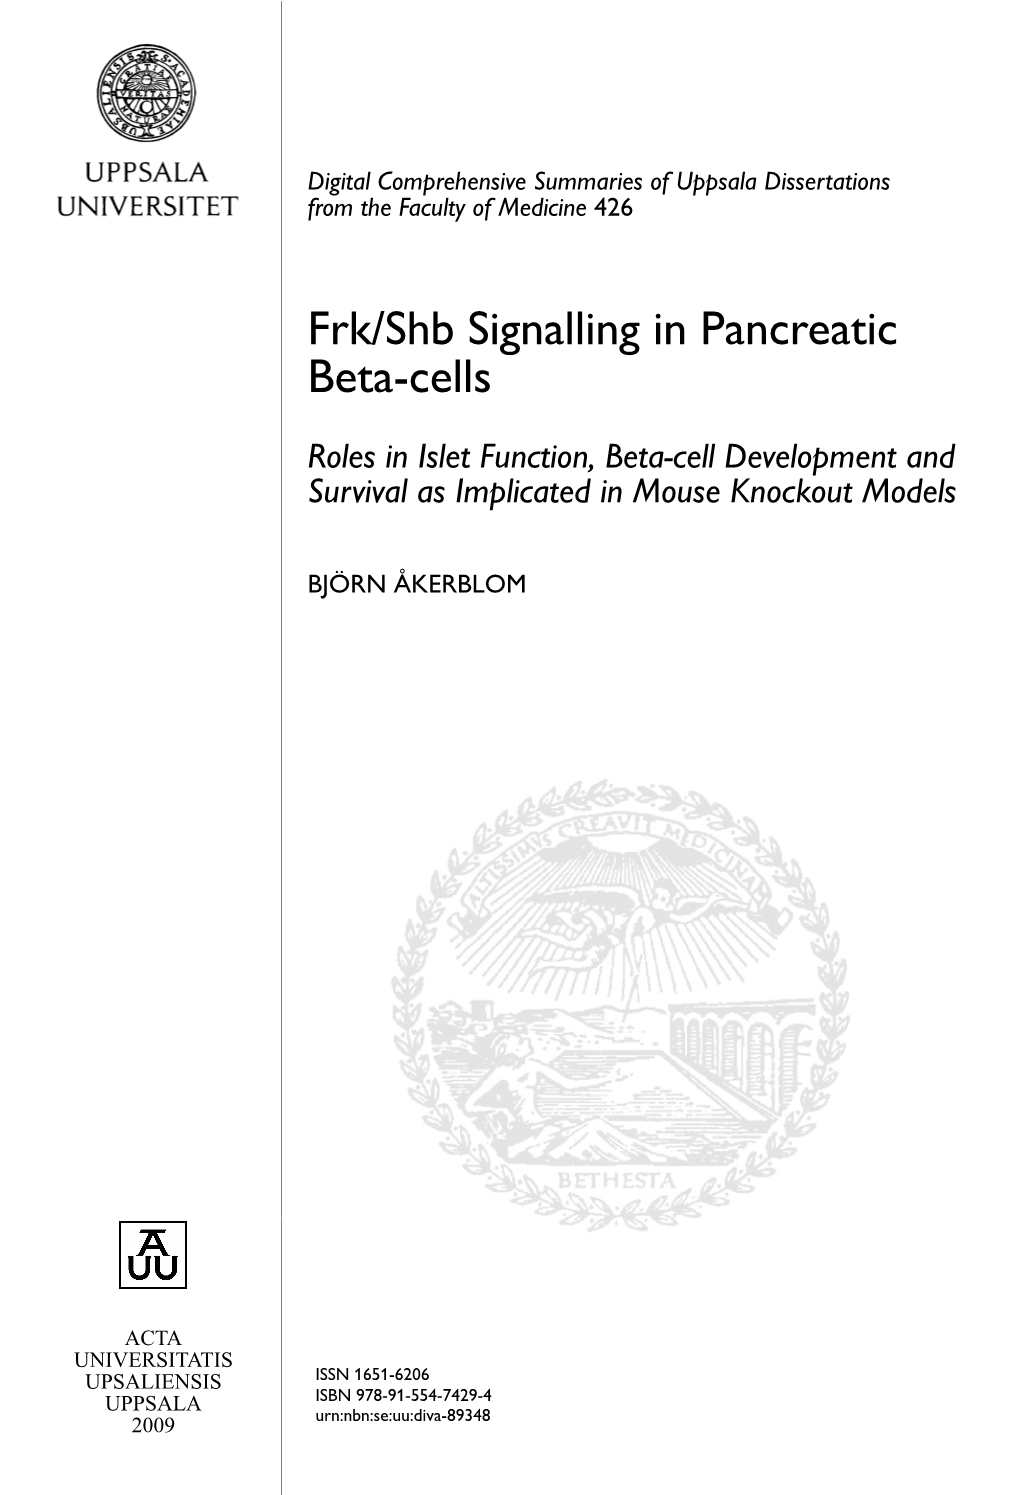 Frk/Shb Signalling in Pancreatic Beta-Cells